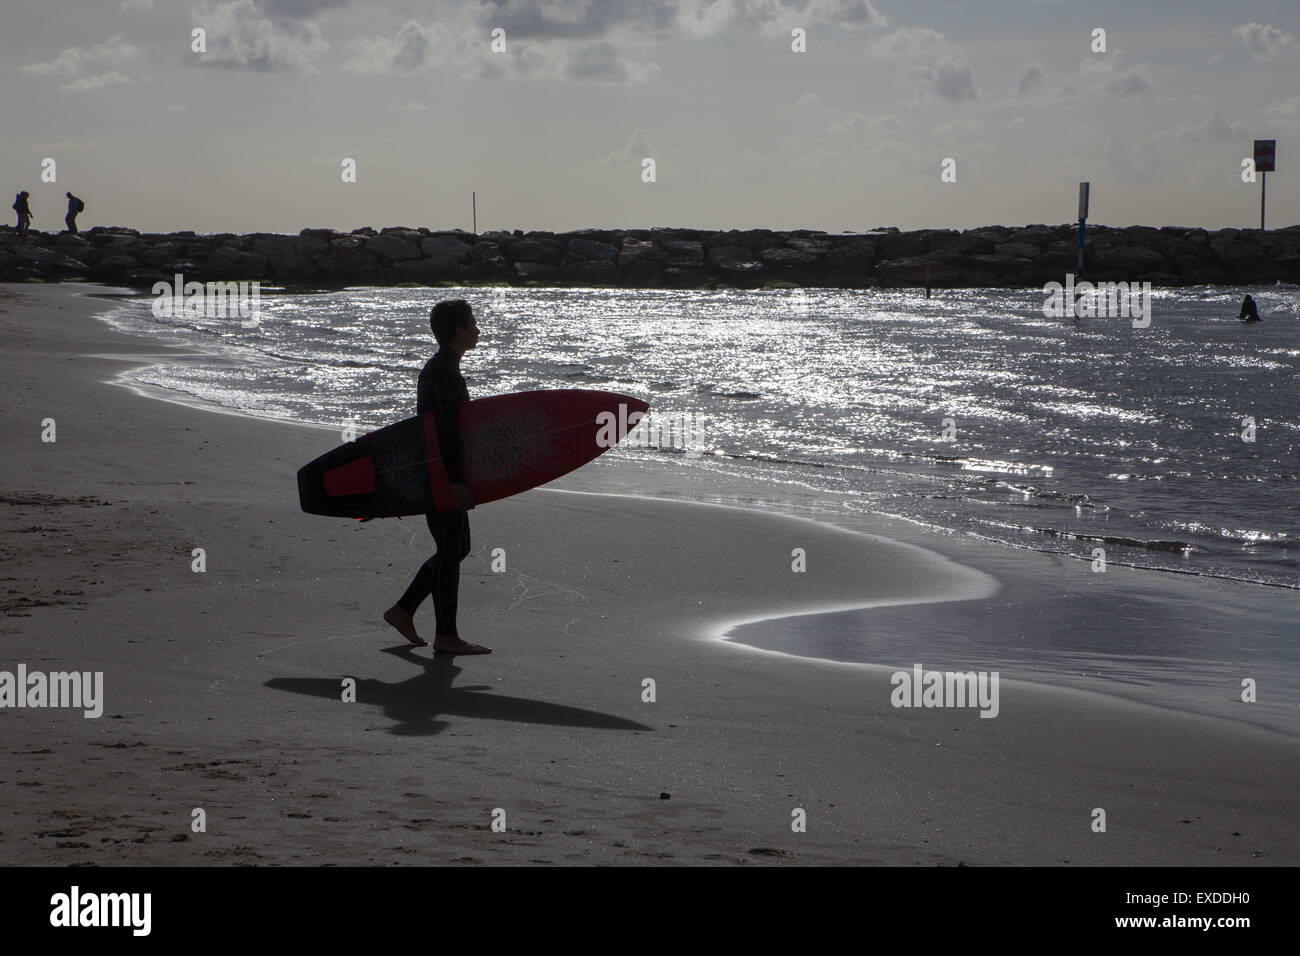 TEL AVIV, ISRAEL - MARCH 2, 2015: The silhouette of surfer on the beach of Tel Aviv. Stock Photo